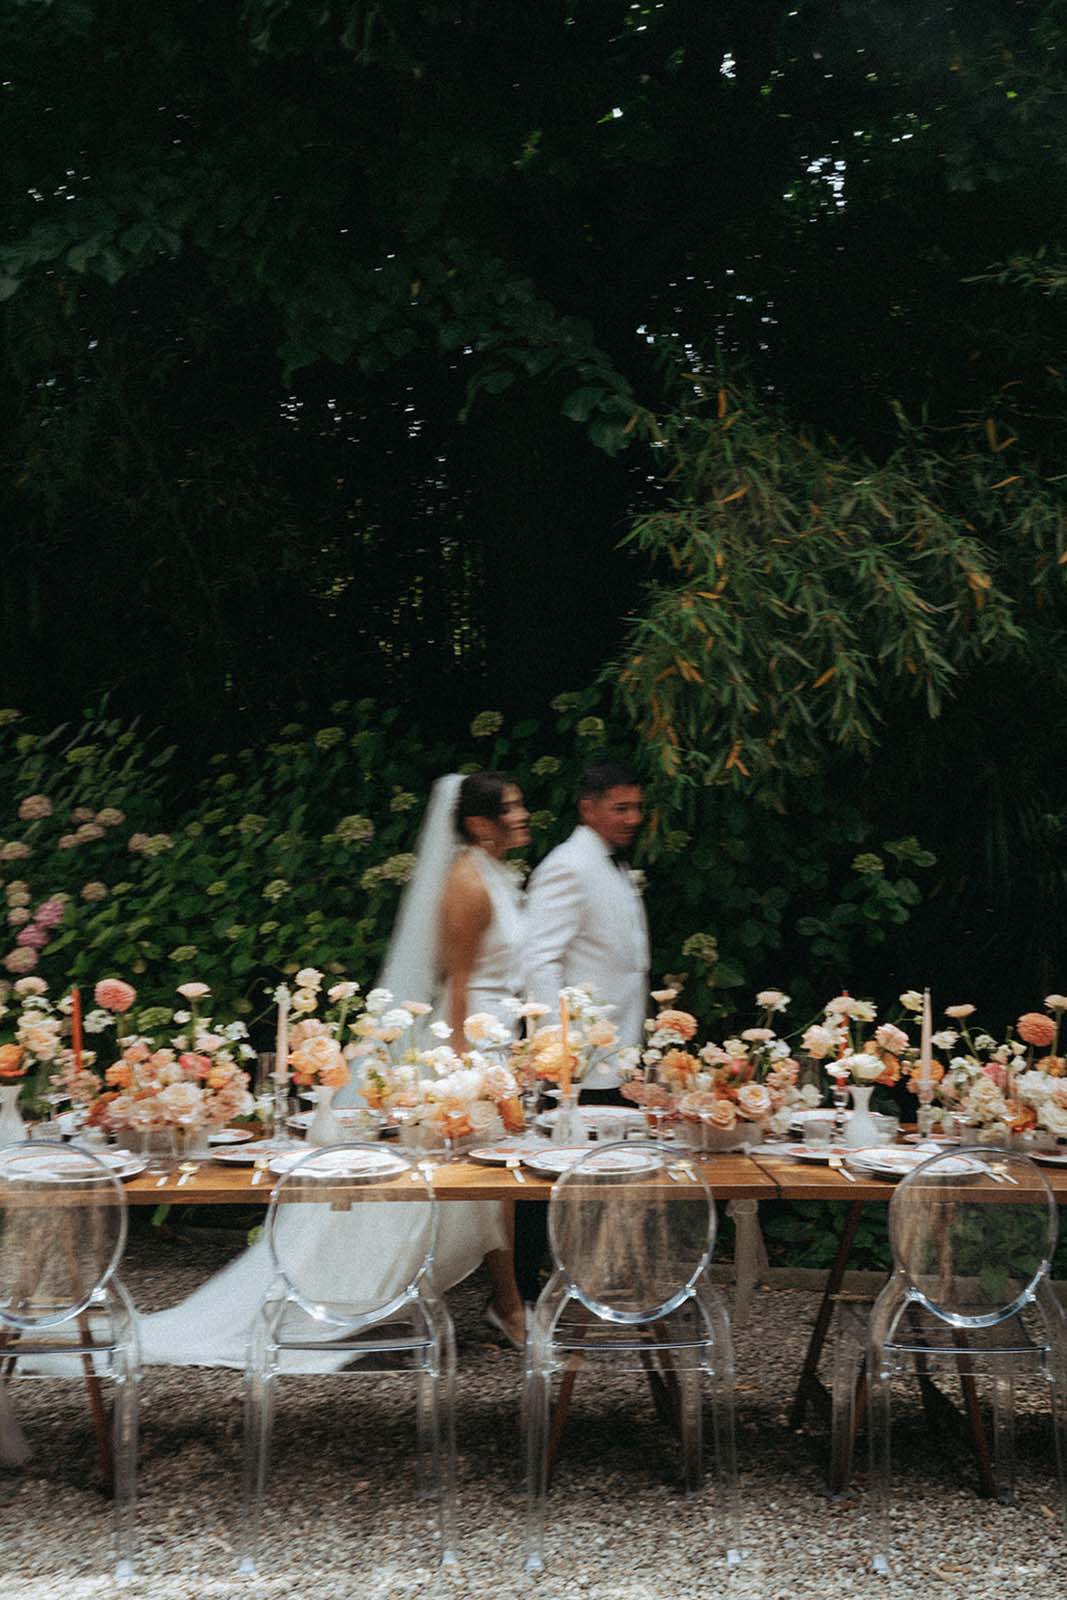 Bride and Groom alongside the wedding table